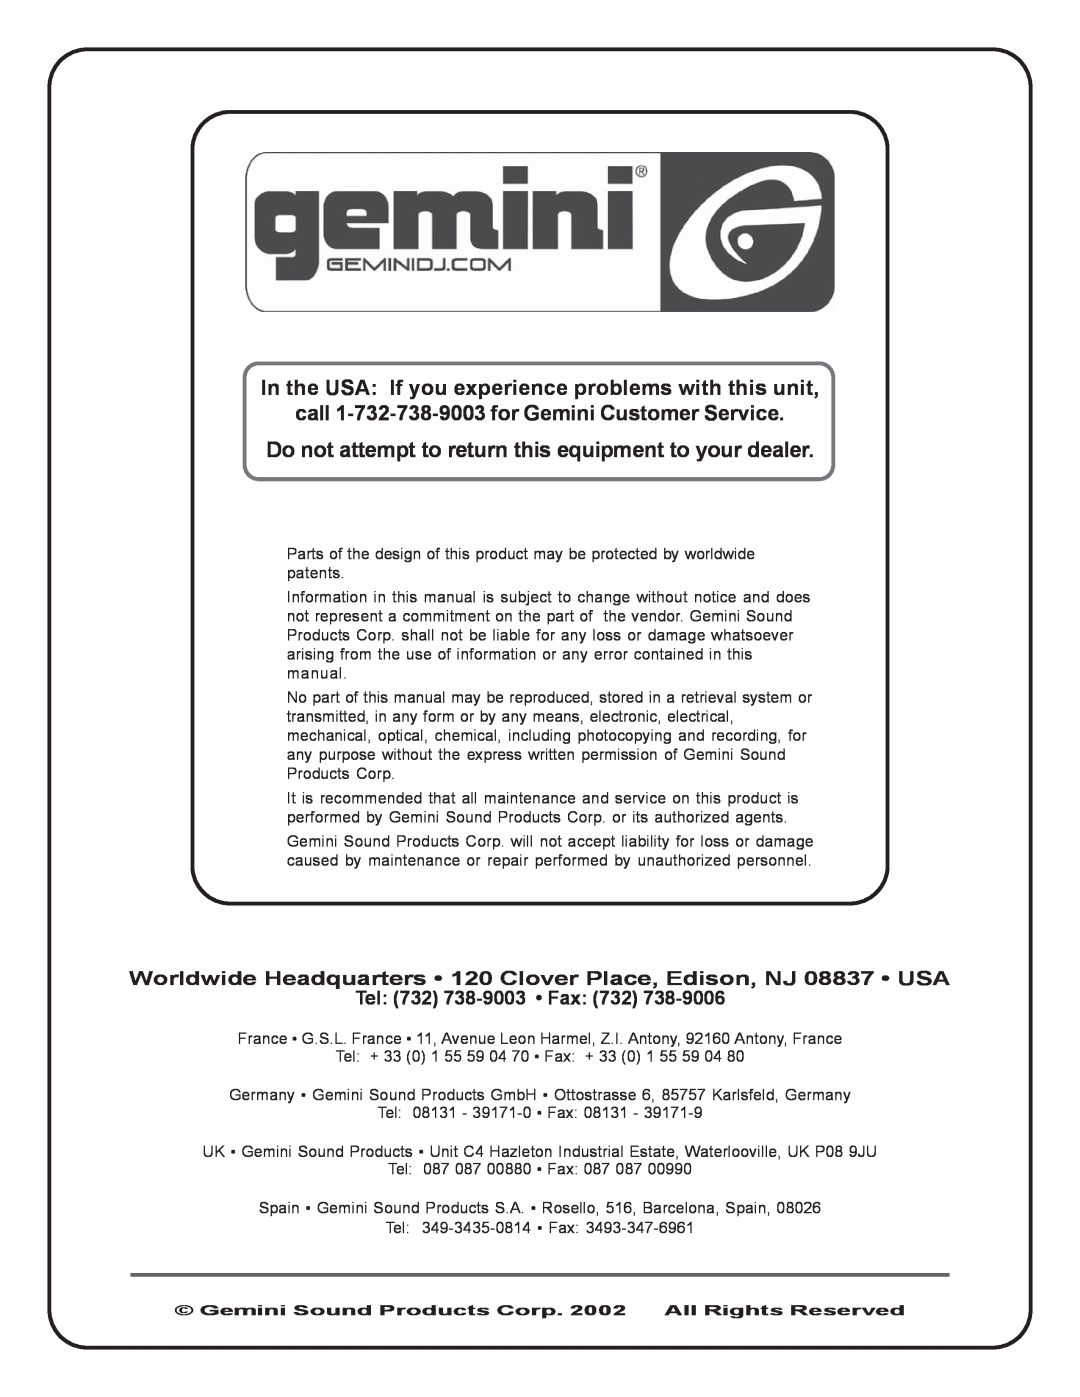 Gemini XPM-3000 manual call 1-732-738-9003for Gemini Customer Service, Tel 732 738-9003 Fax 